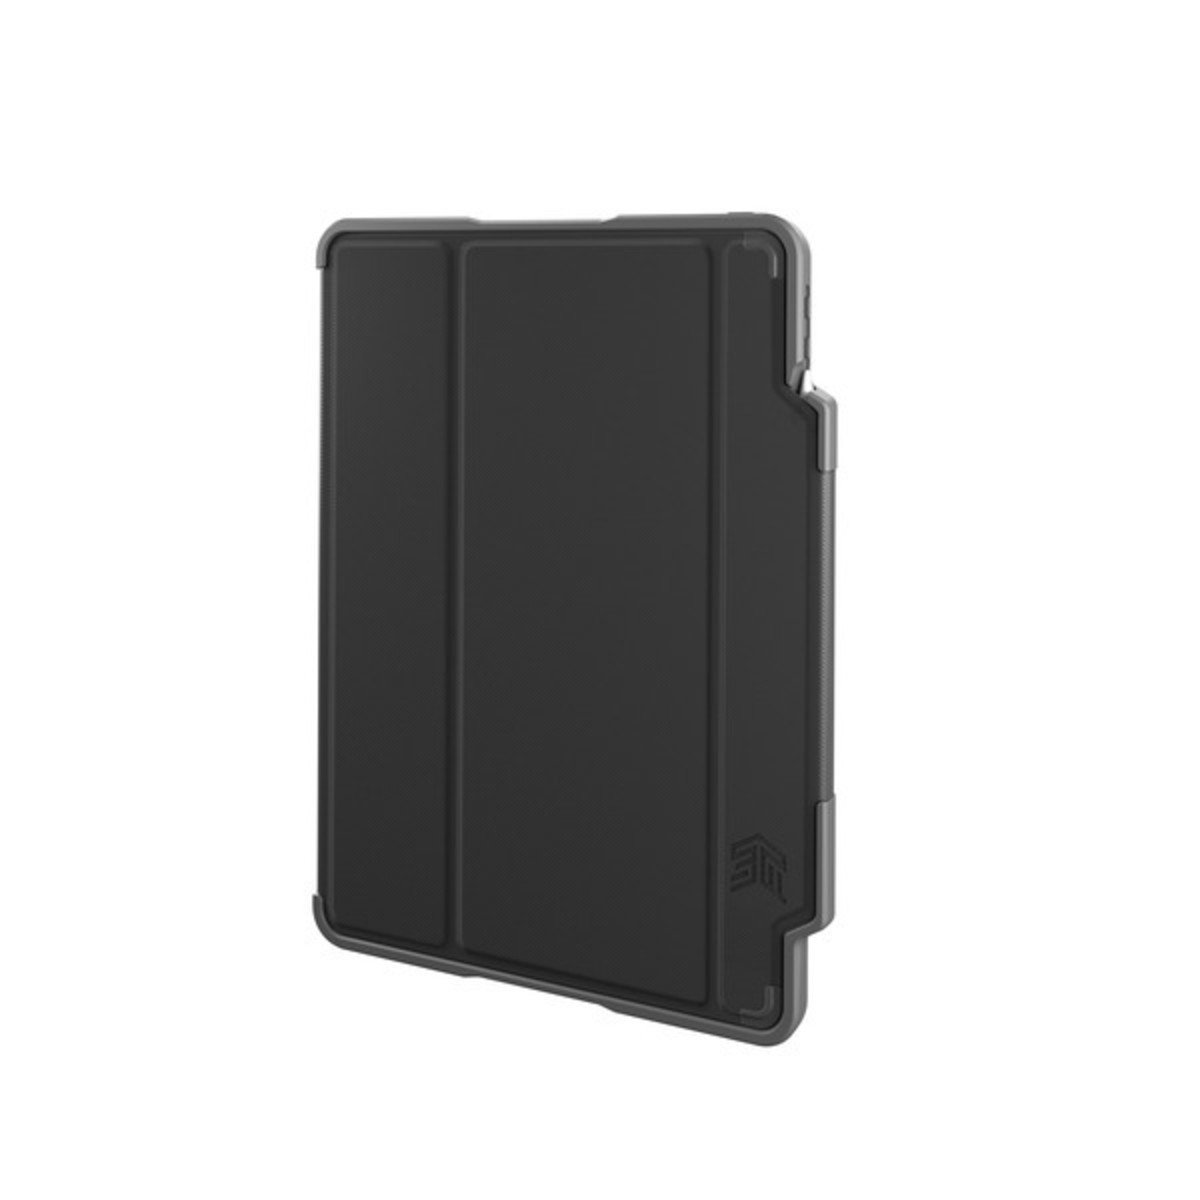 STM Dux Plus Folio Case with Apple Pencil Storage for iPad Pro 11 Inch (2nd Gen) - Black